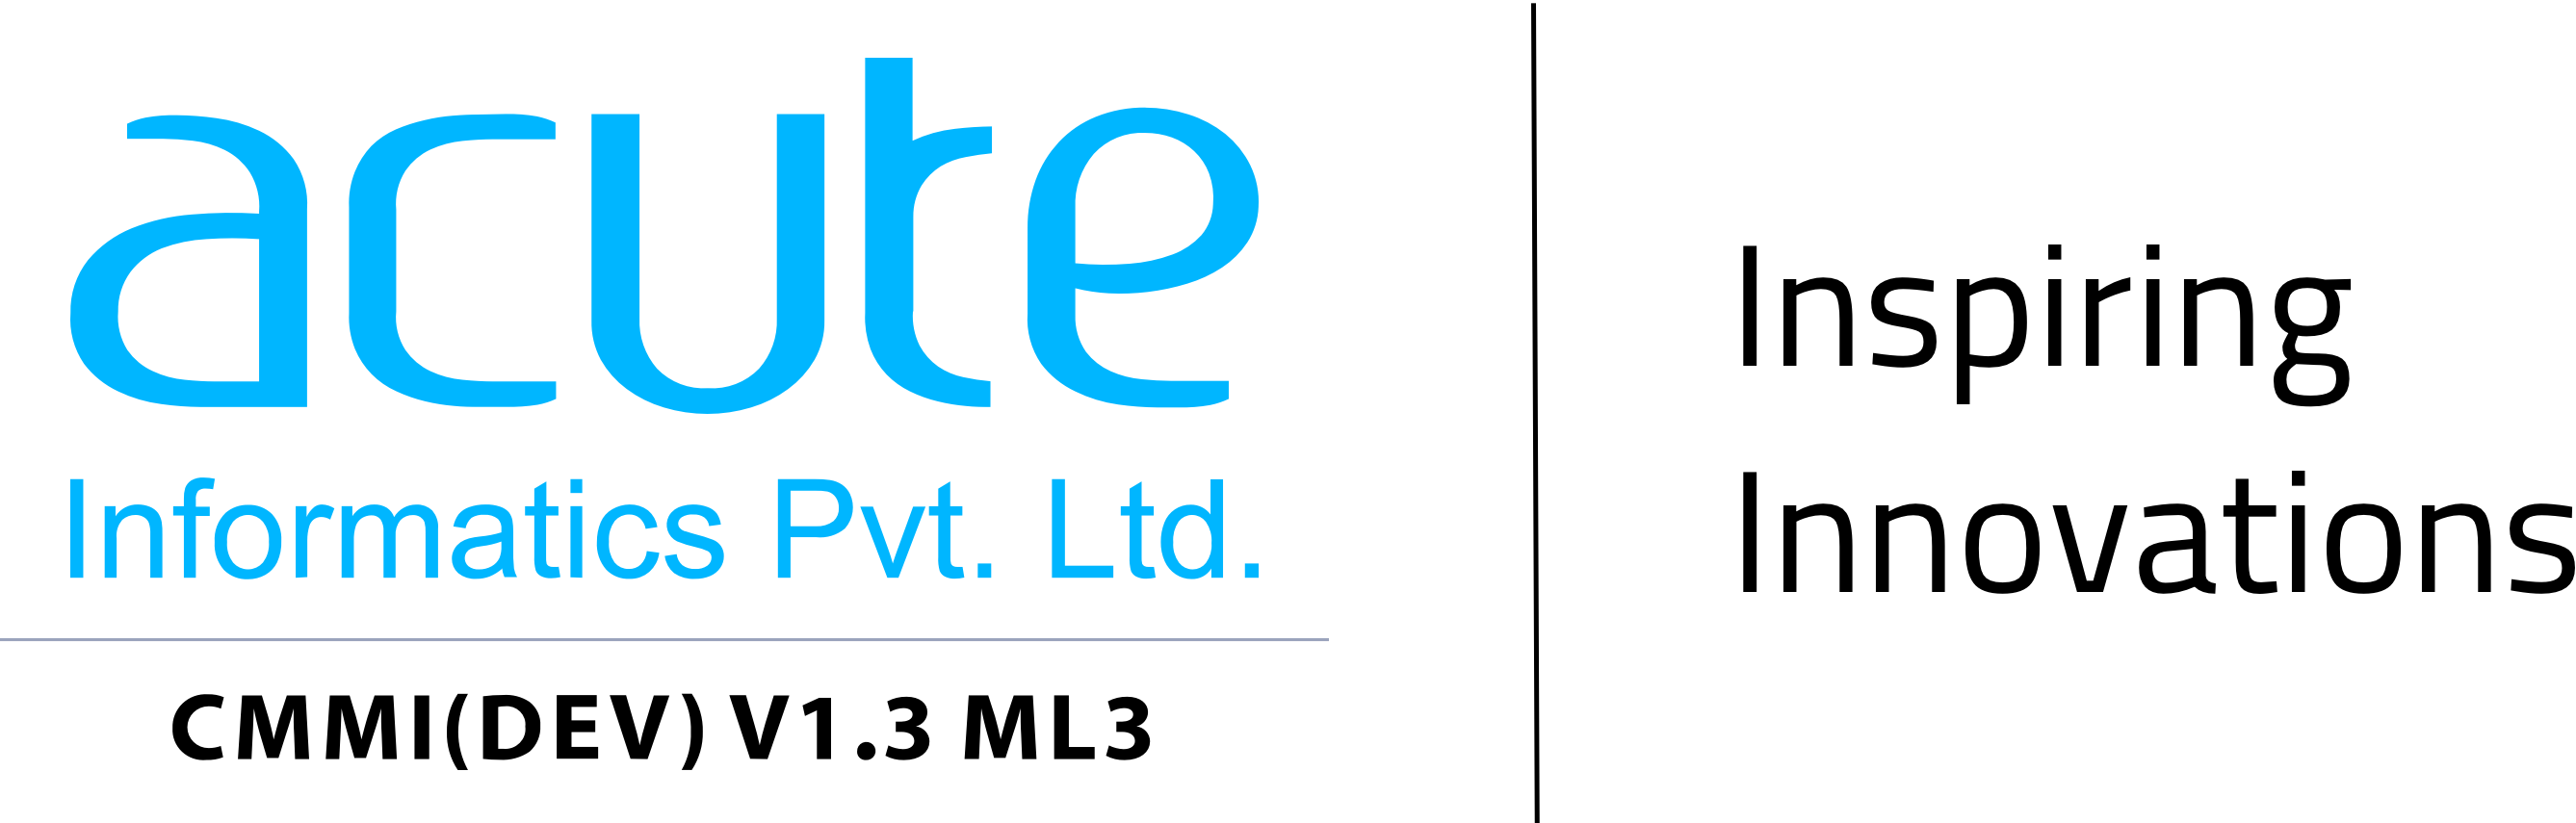 Acute Informatics Pvt. Ltd